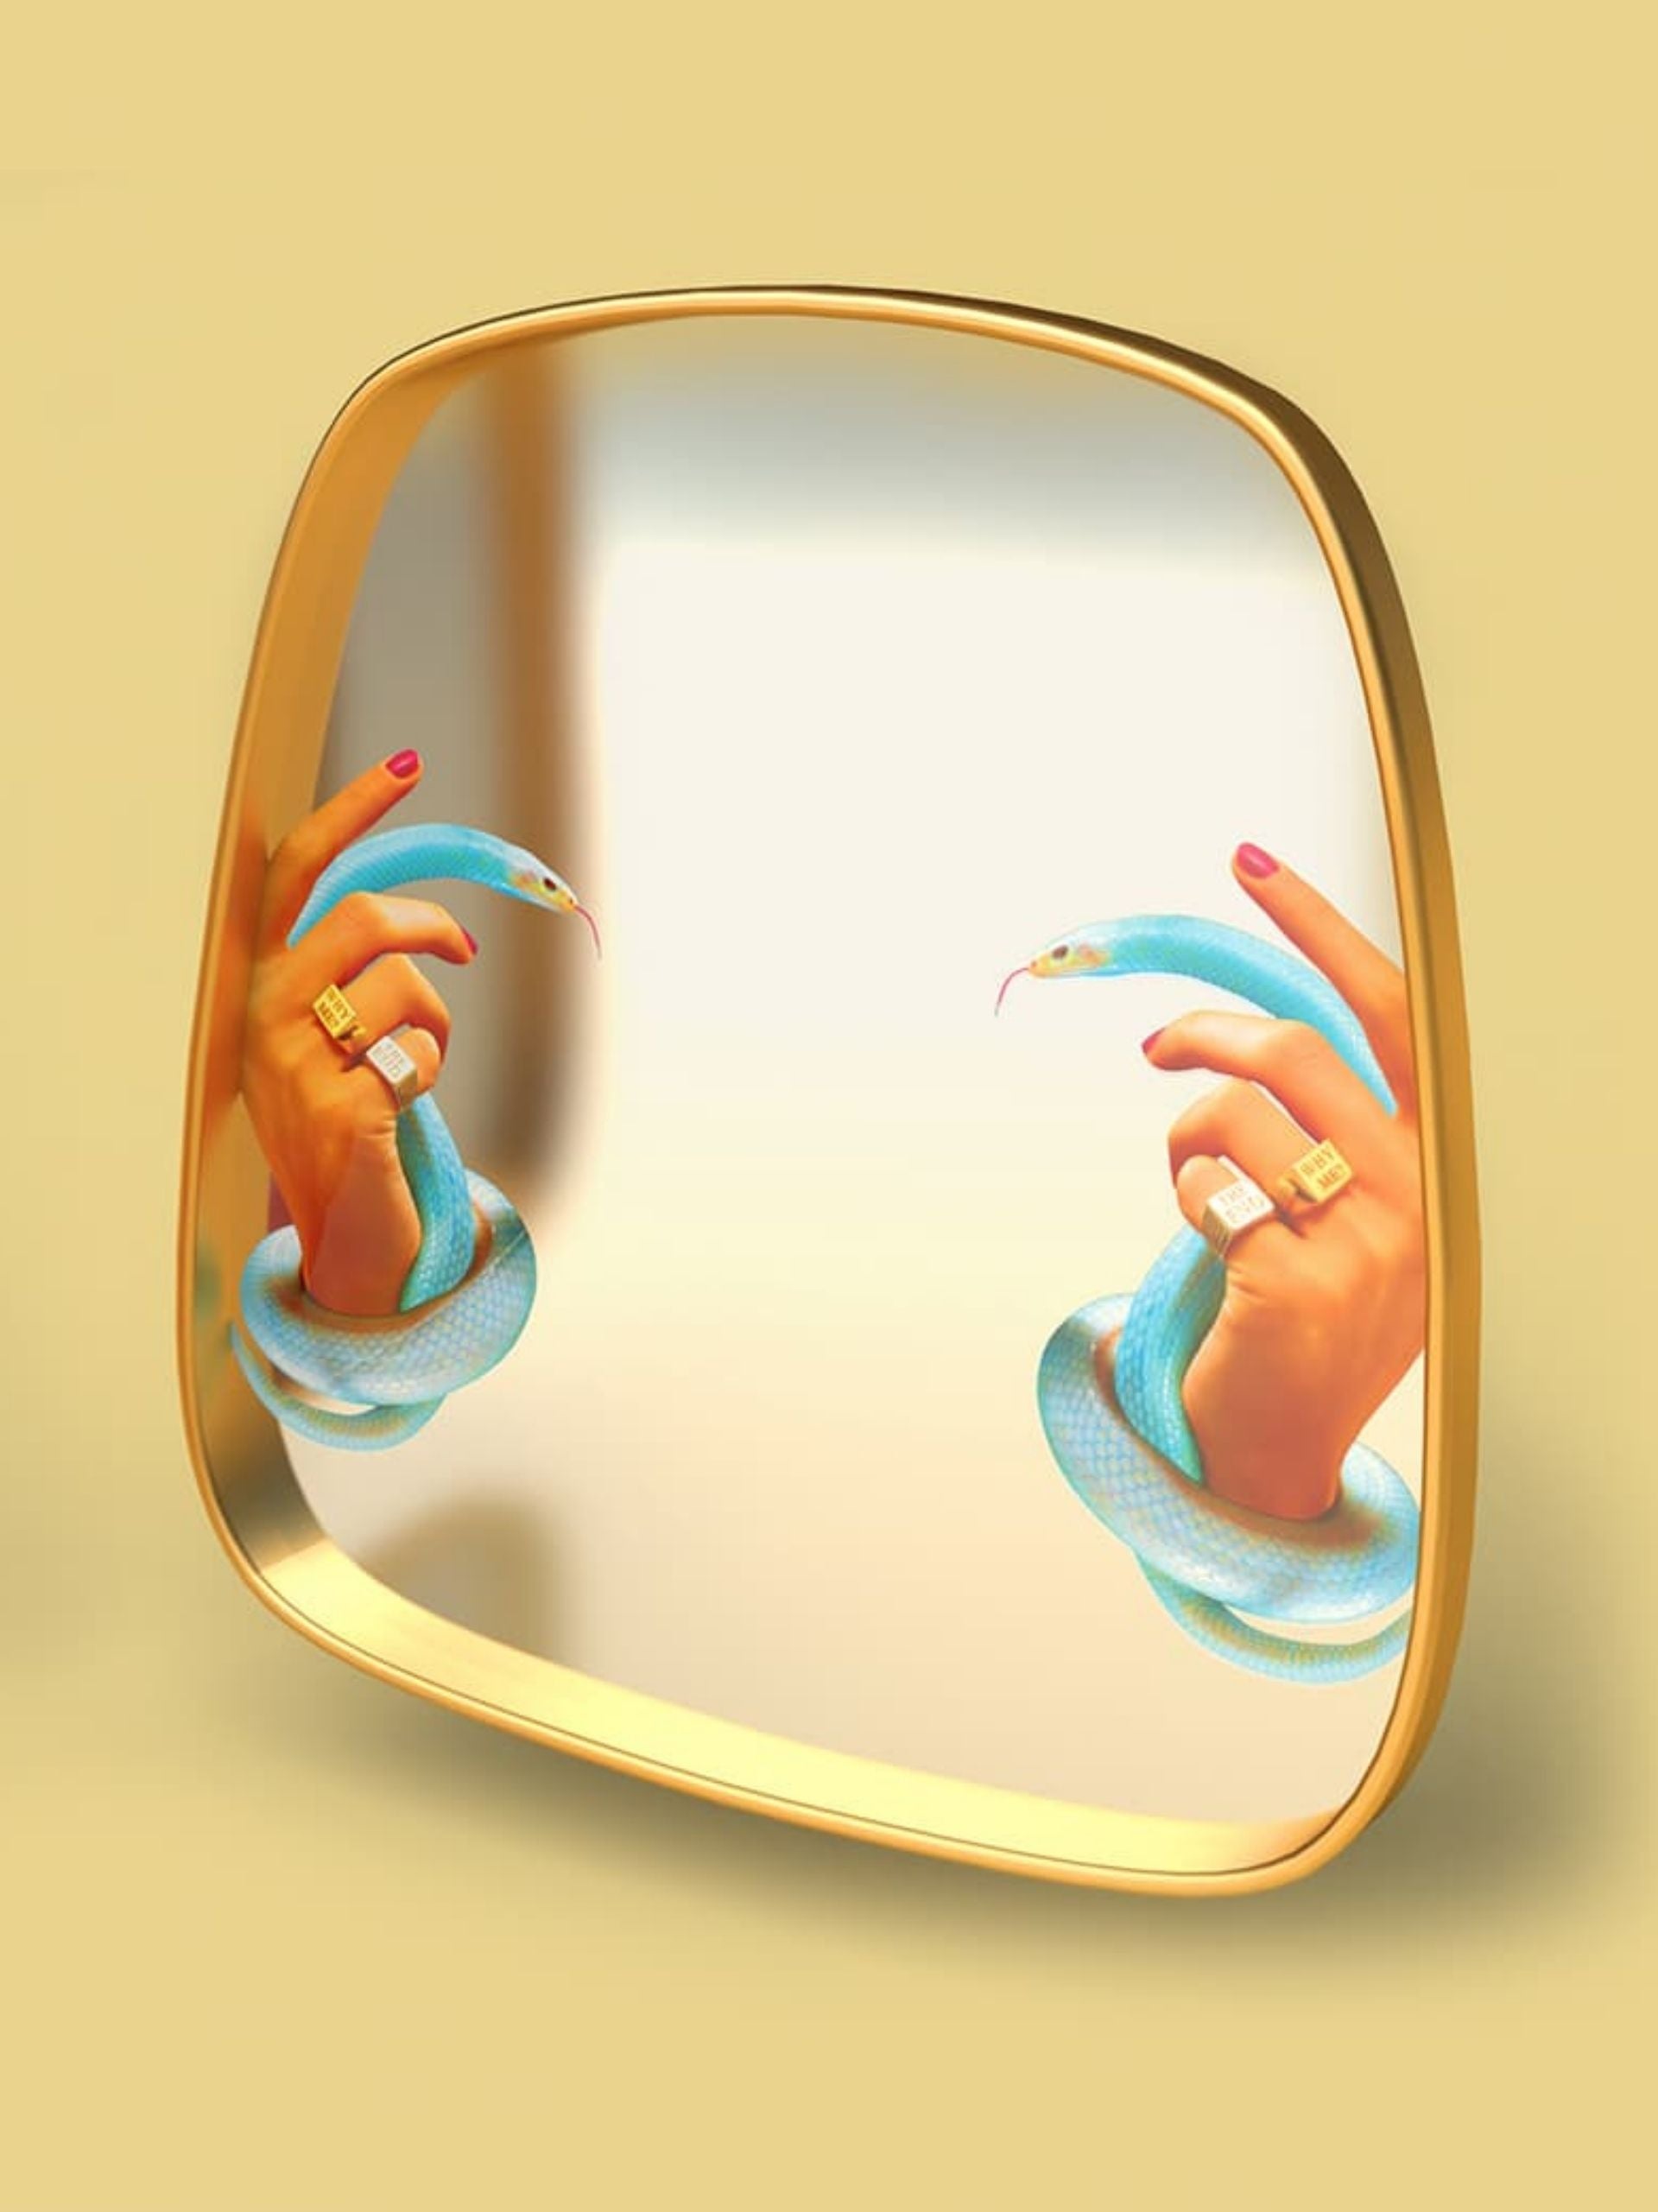 Mirror / Hands with Snakes Seletti Seletti wears Toiletpaper 